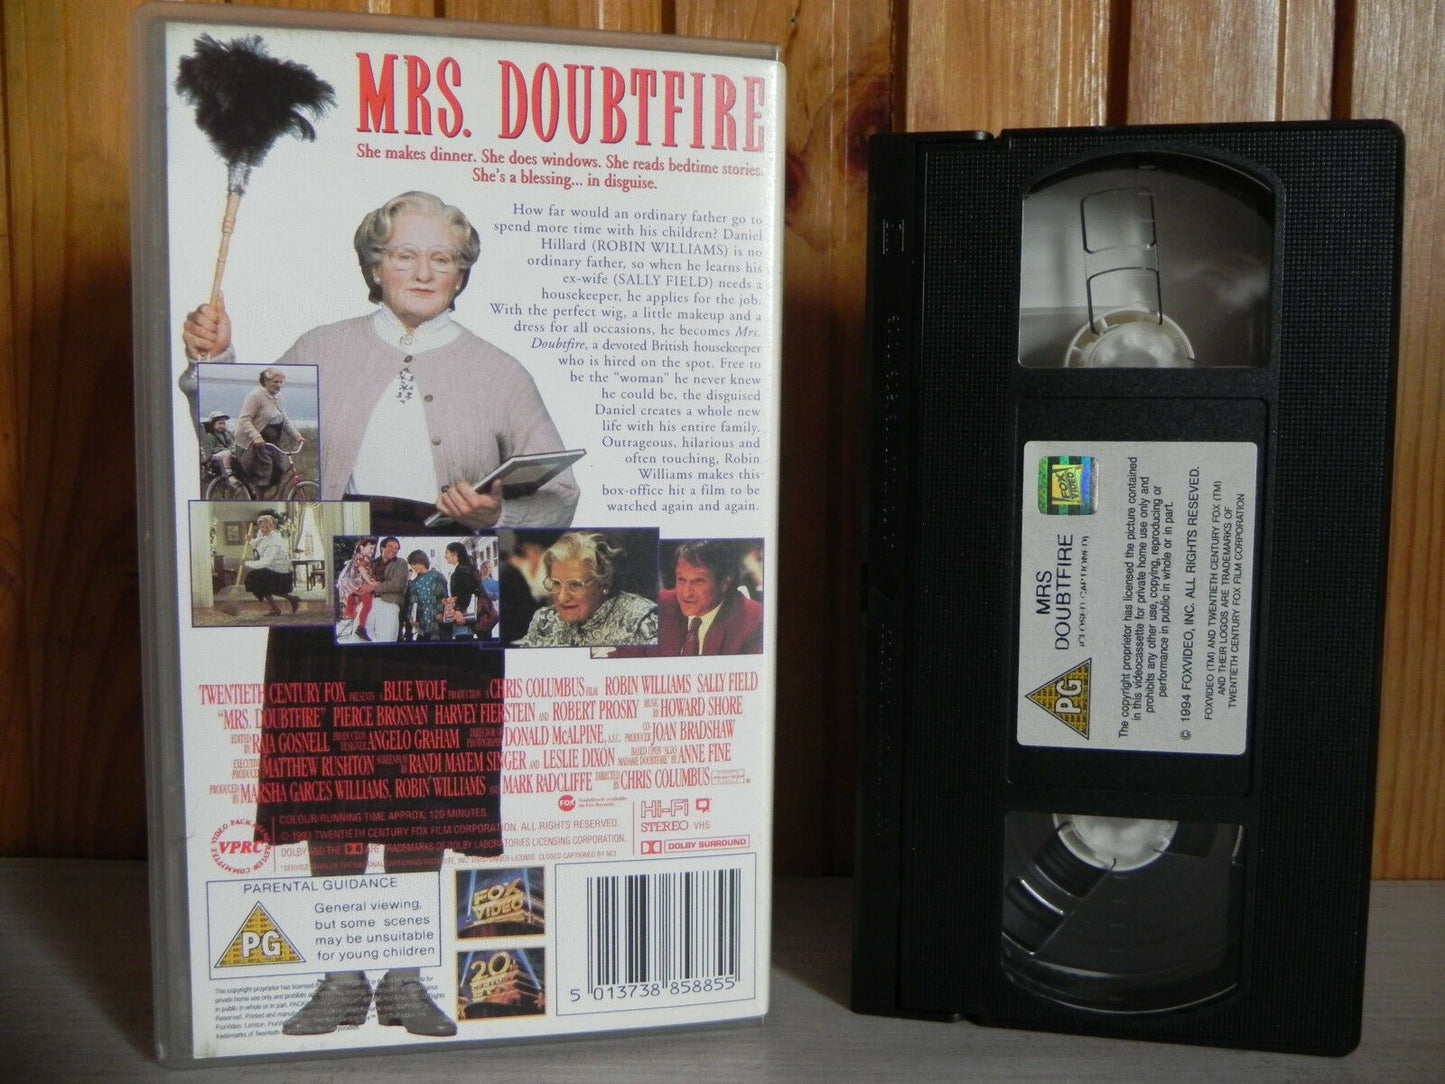 Mrs. Doubtfire - Fox Video - Transgender - Comedy - Robin Williams - Pal VHS-